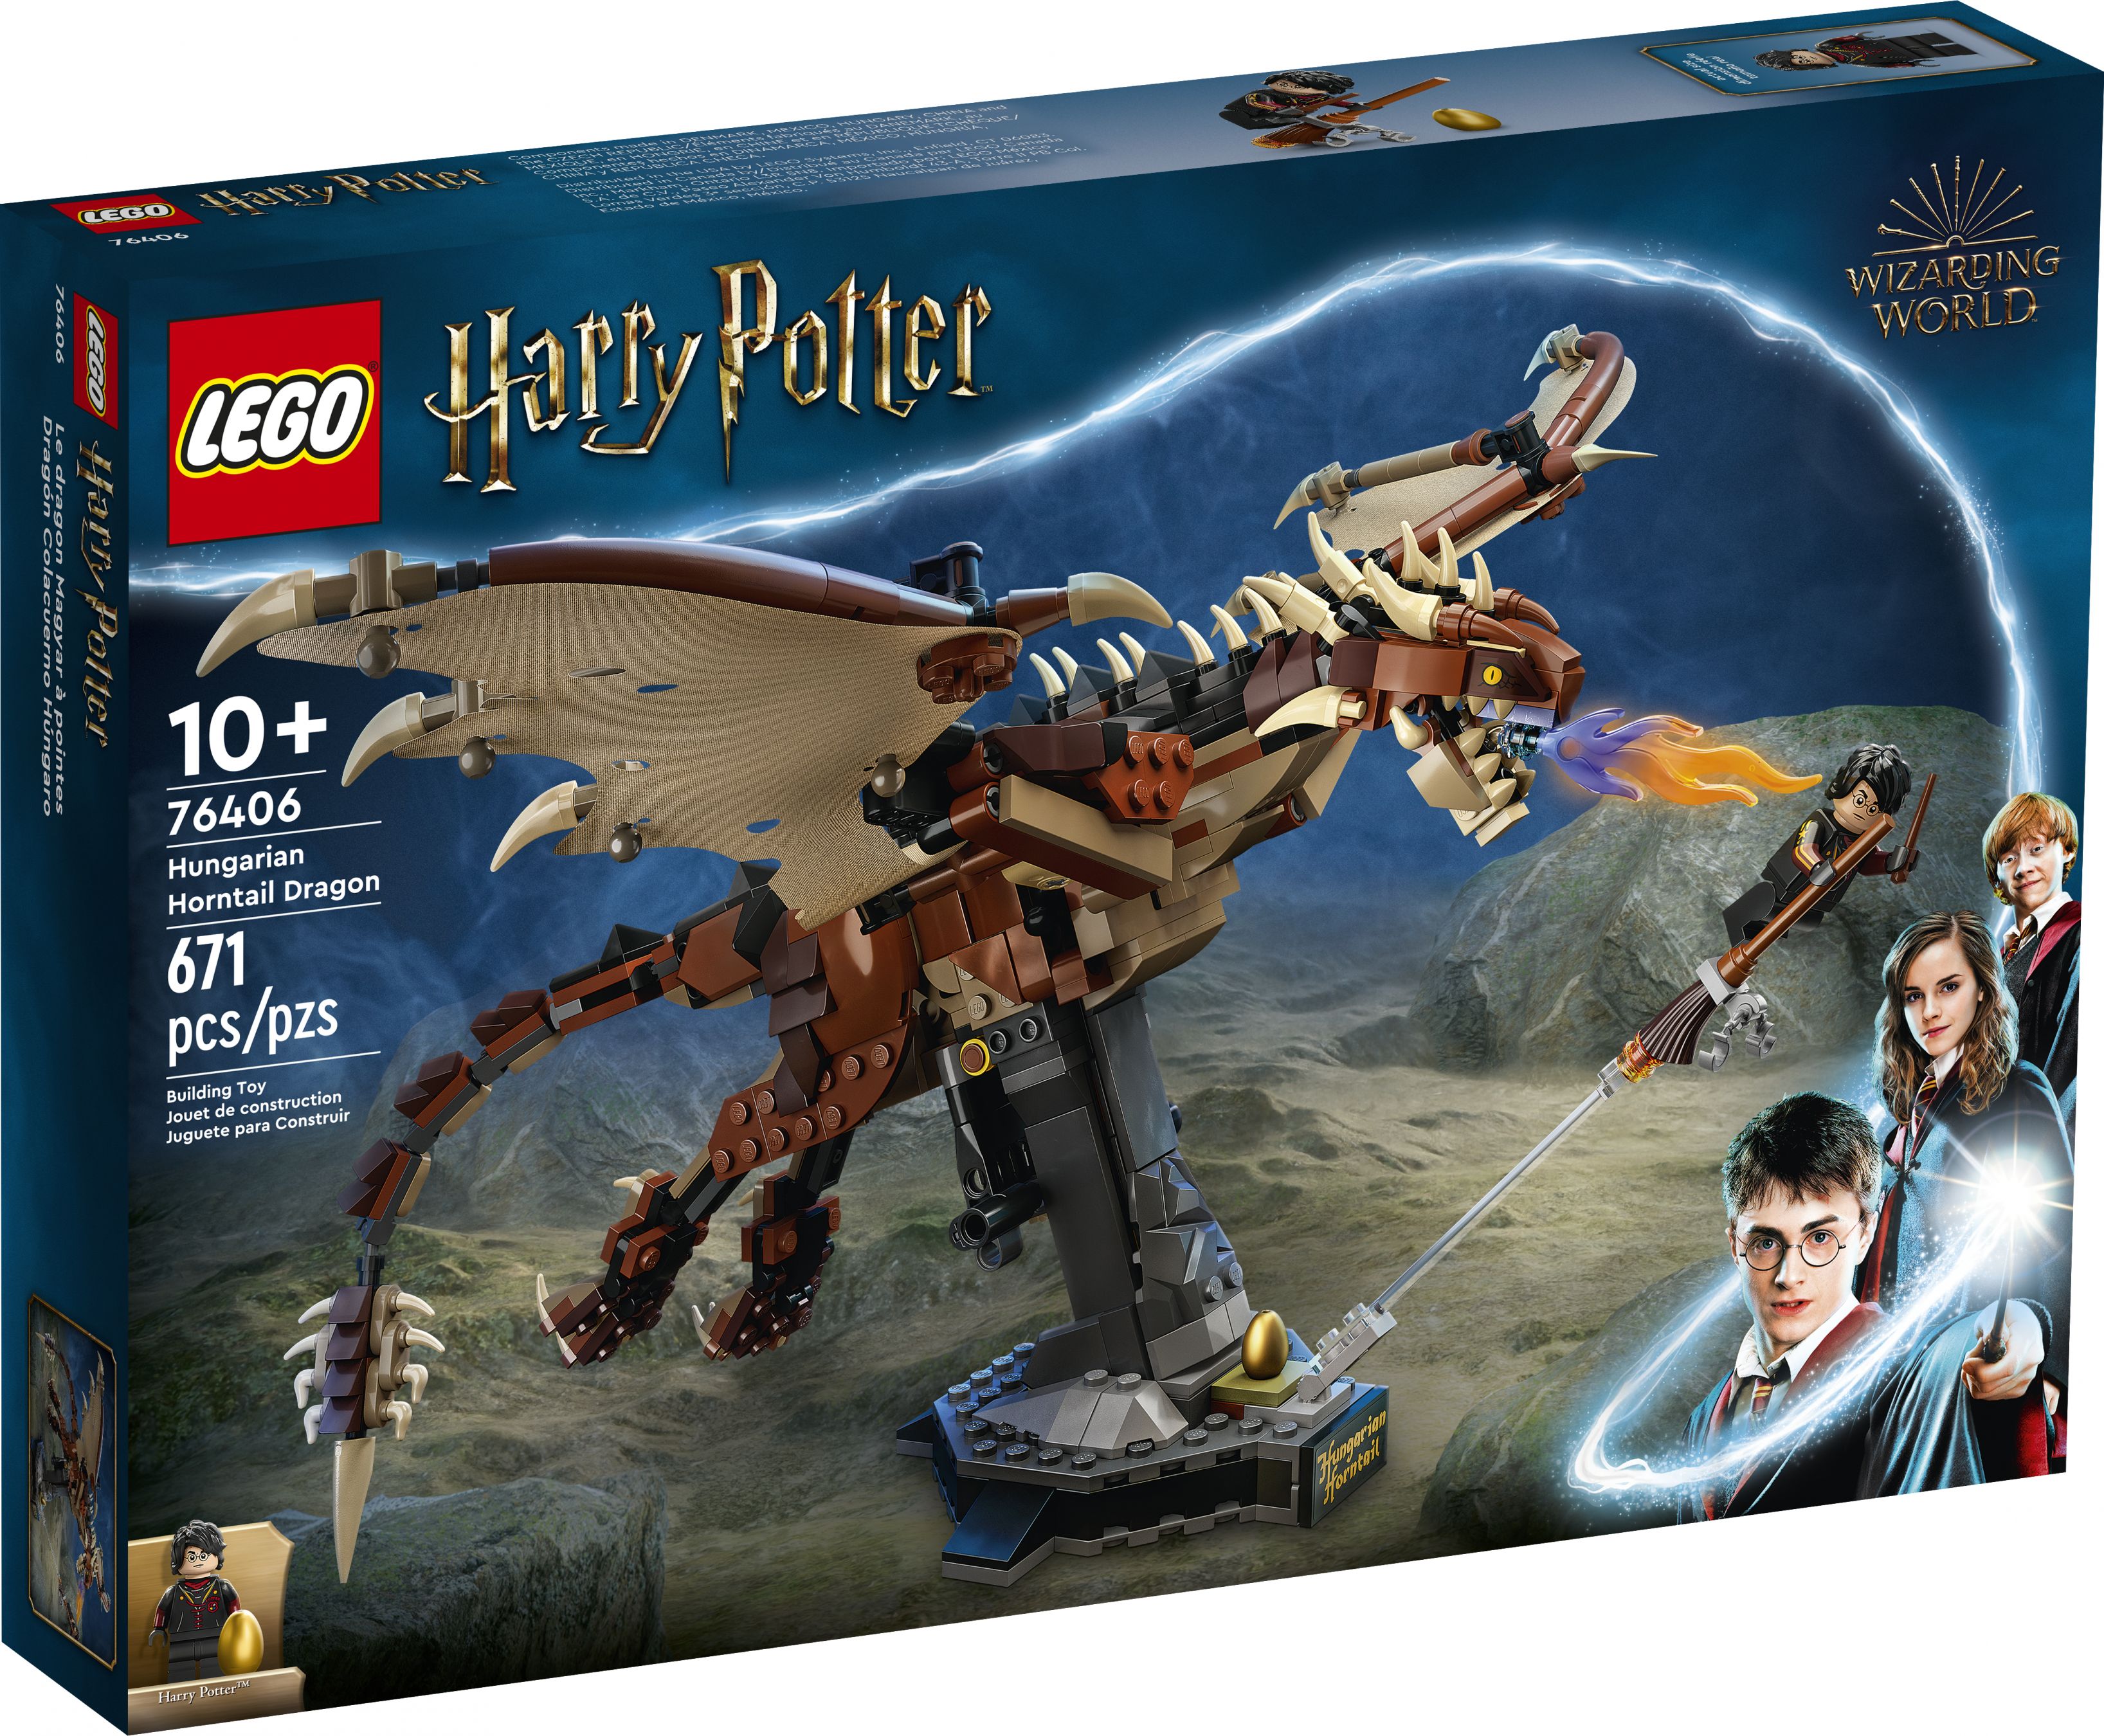 LEGO Harry Potter 76406 Ungarischer Hornschwanz LEGO_76406_alt1.jpg